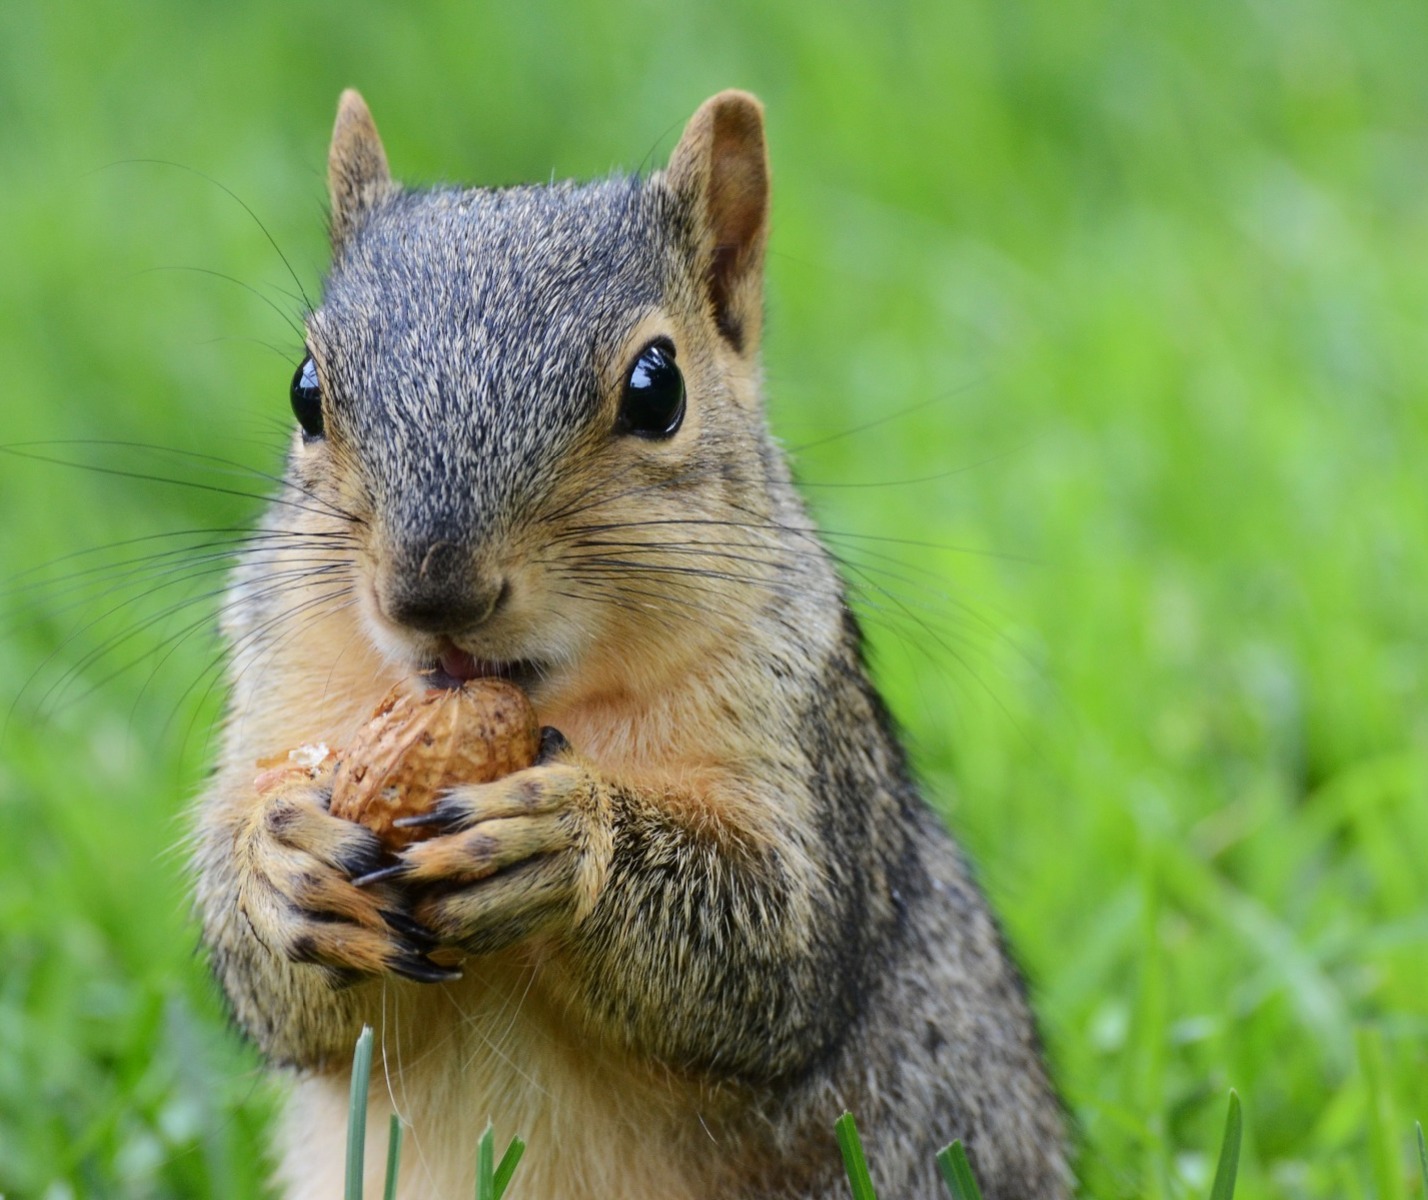 grey squirrel with a nut